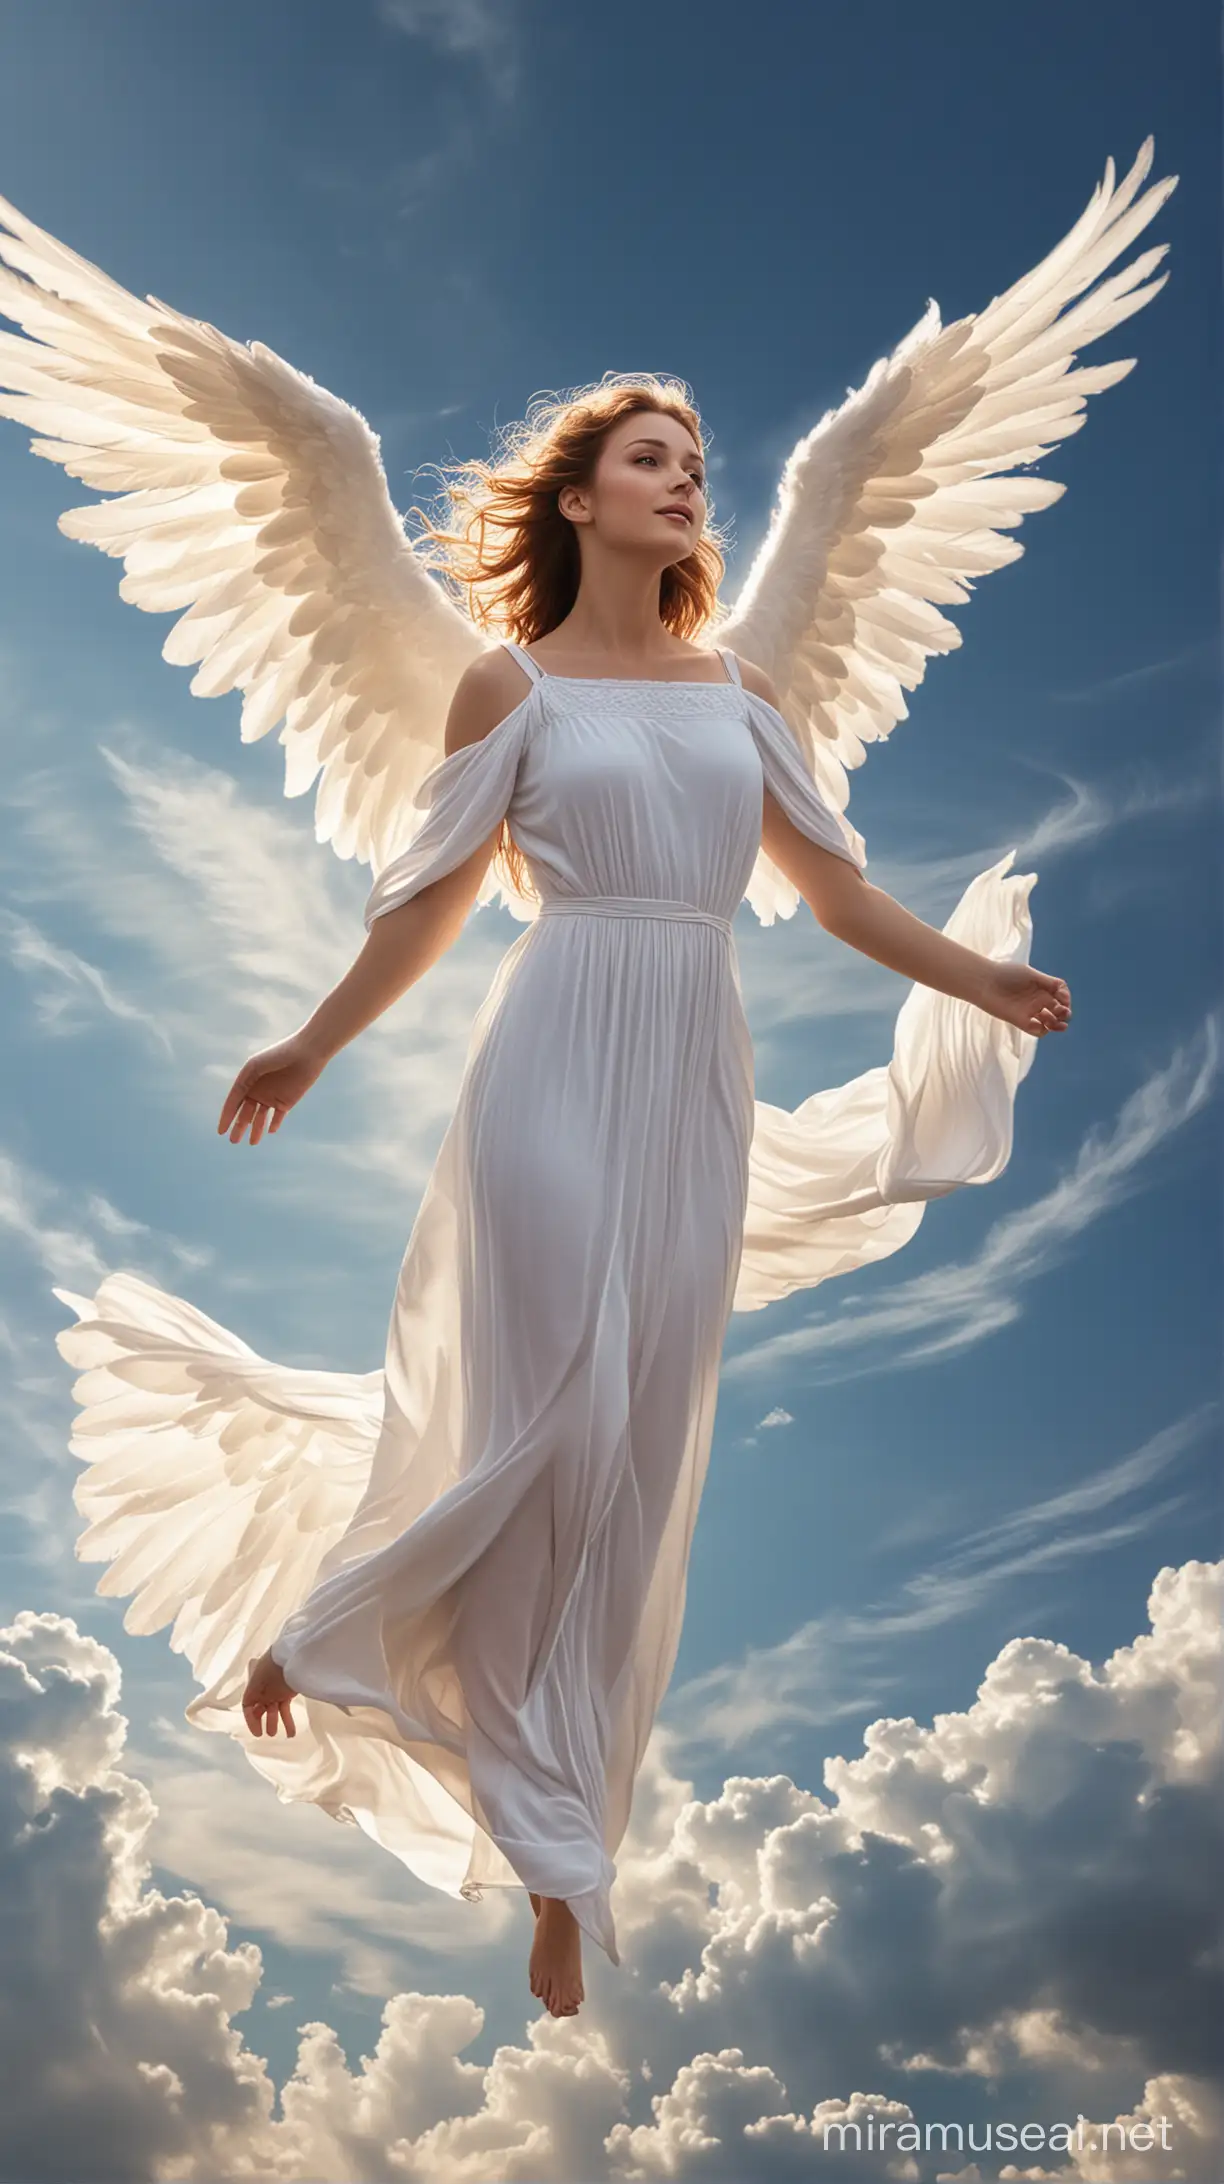 Heavenly Angel Soaring Amidst Clouds